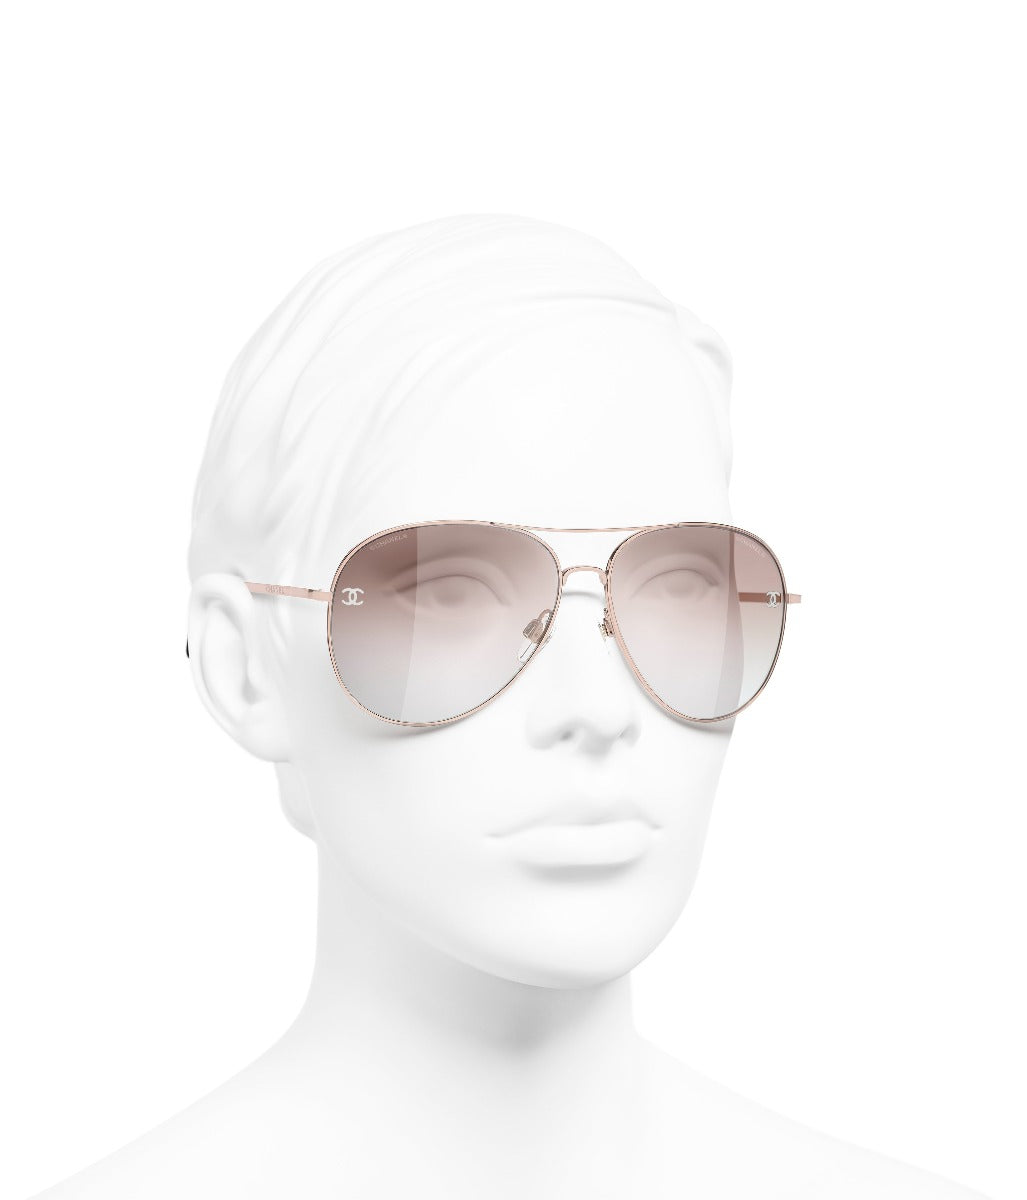 Chanel 5487 1721/8H Sunglasses